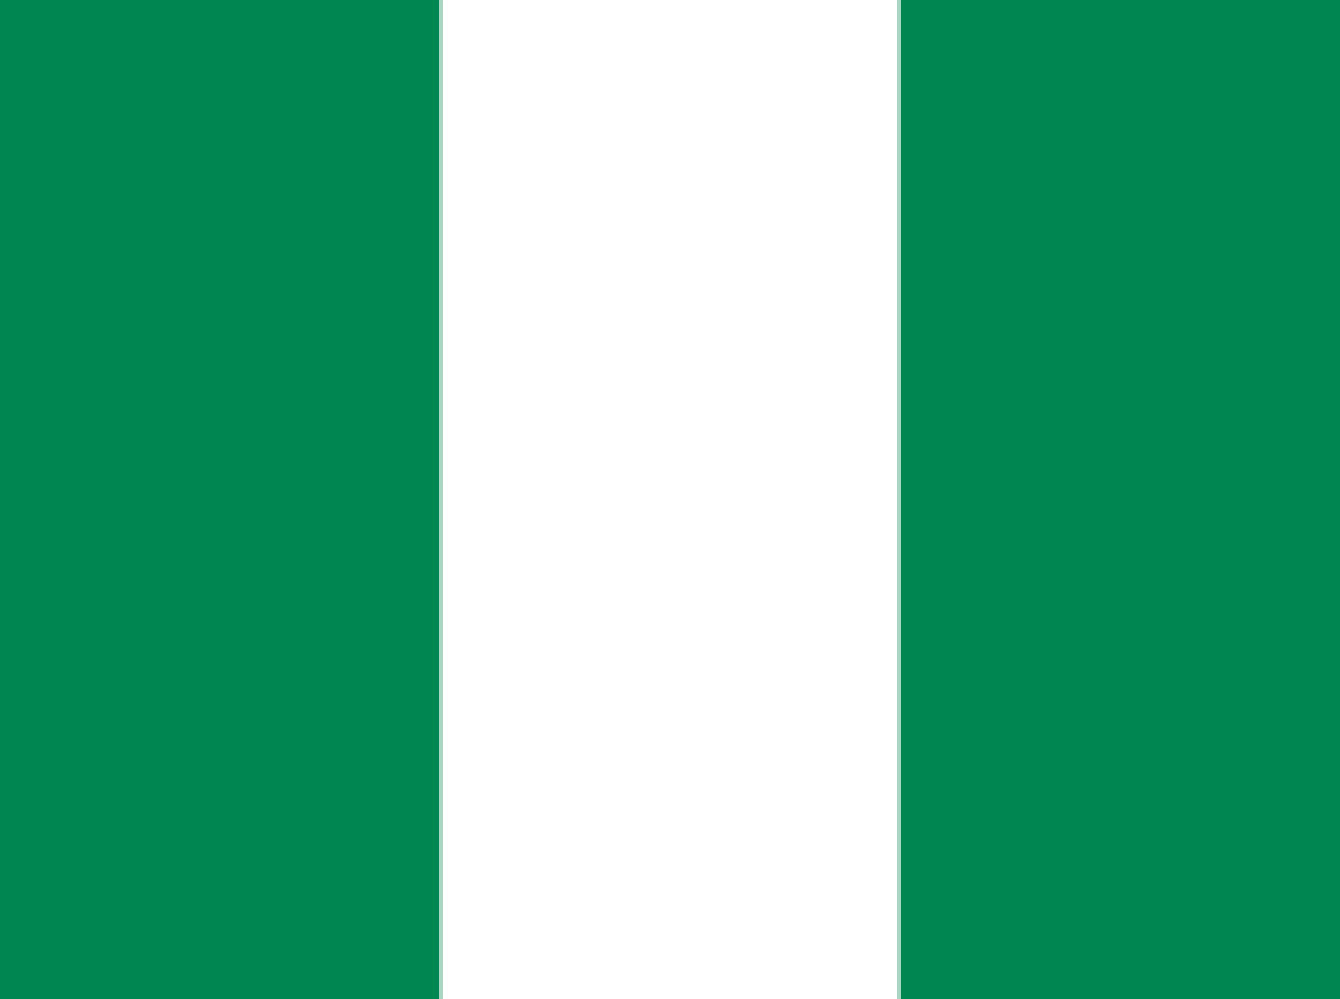 TESSA - Nigeria